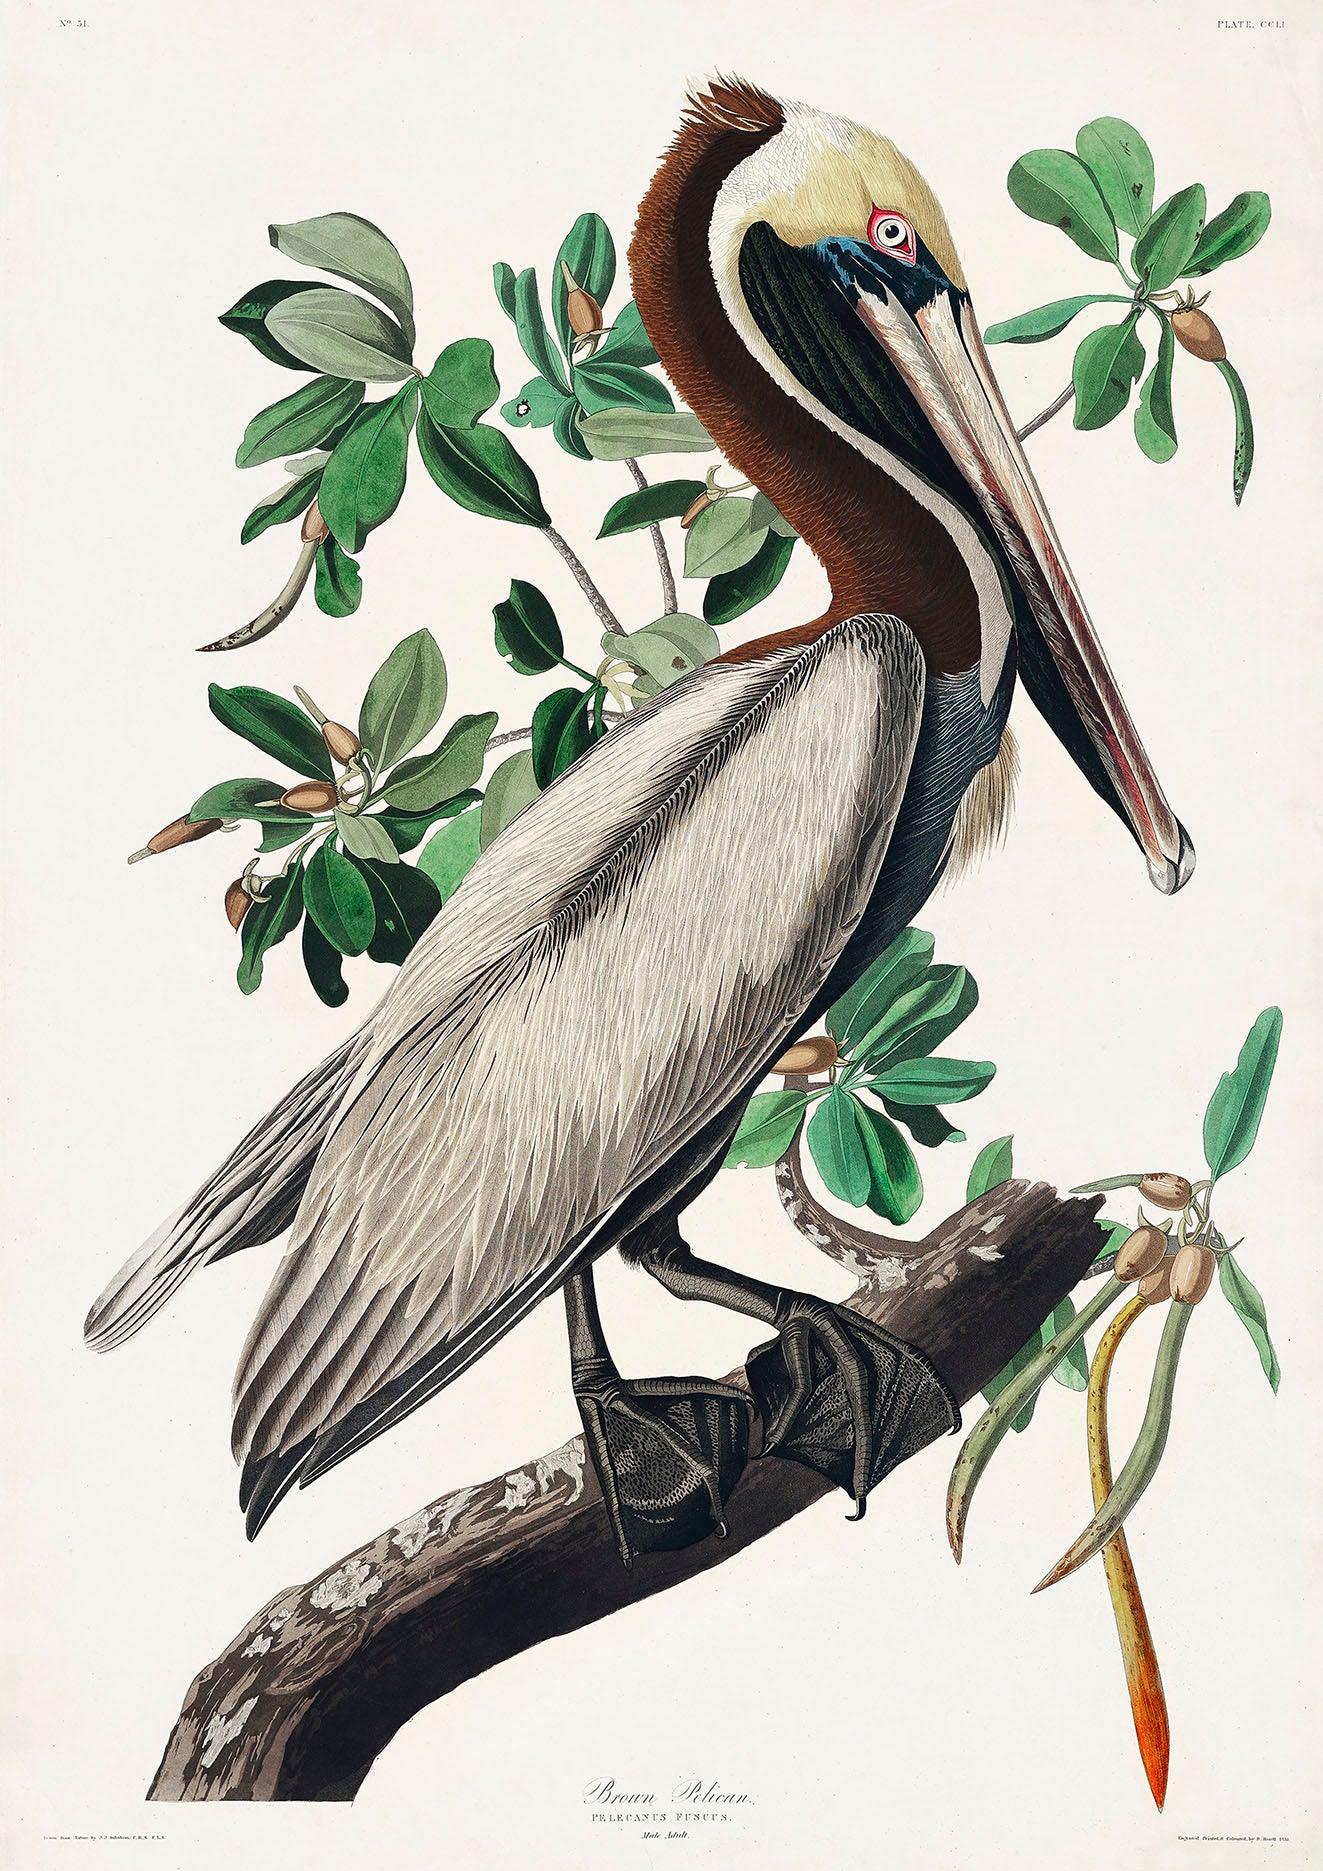 BROWN PELICAN PRINT: Audubon Birds of America Art Illustration - Pimlico Prints